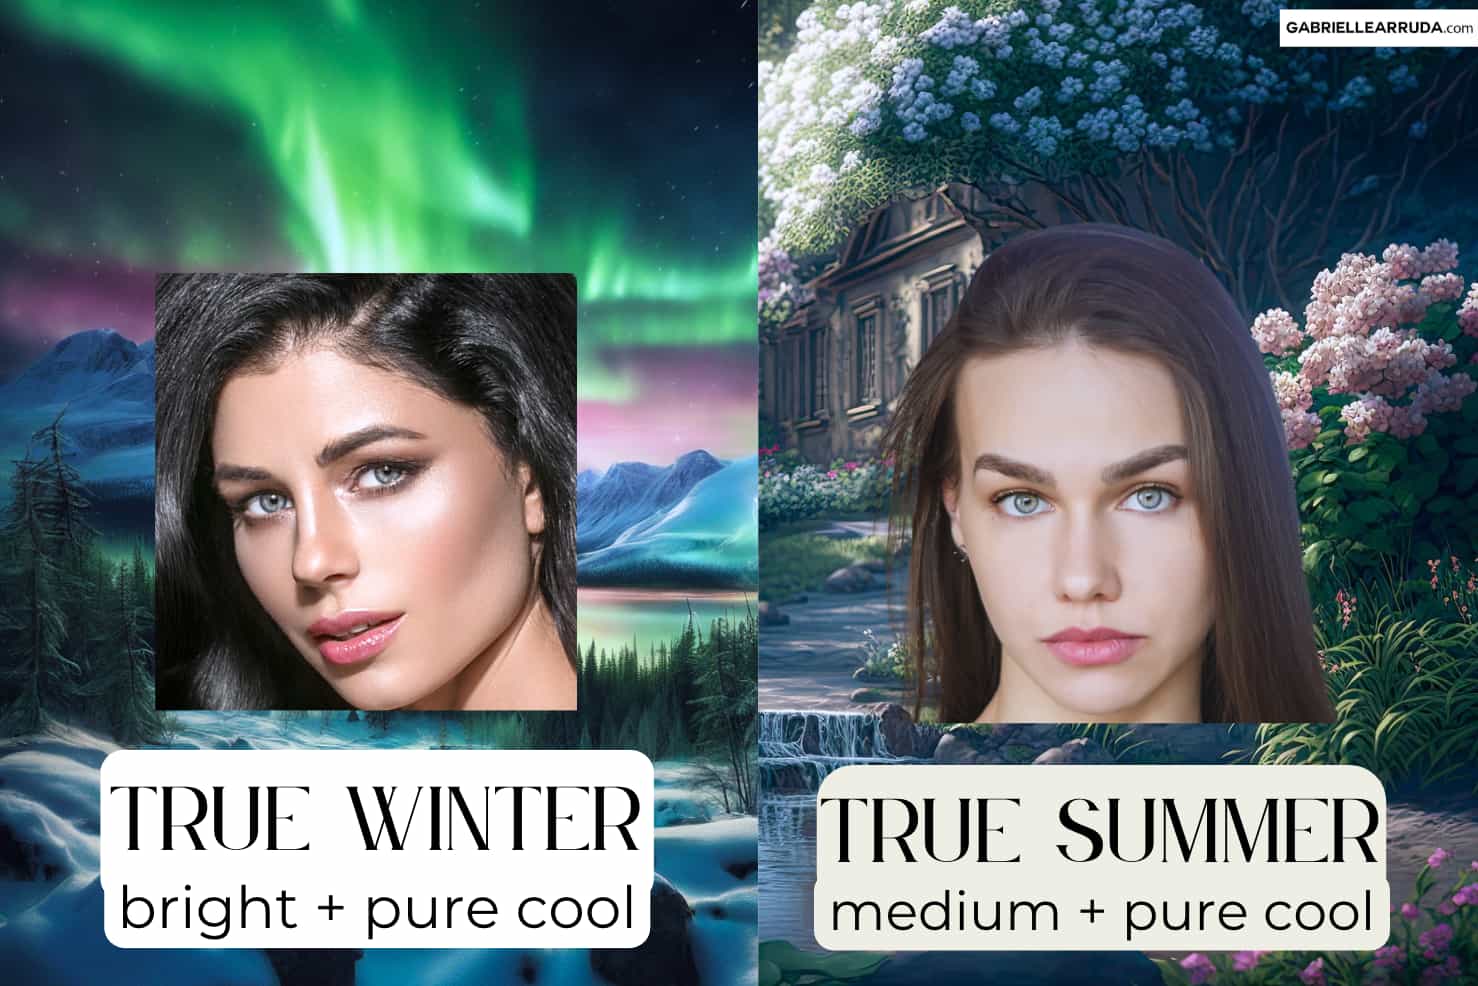 true winter vs true summer landscape plus face examples